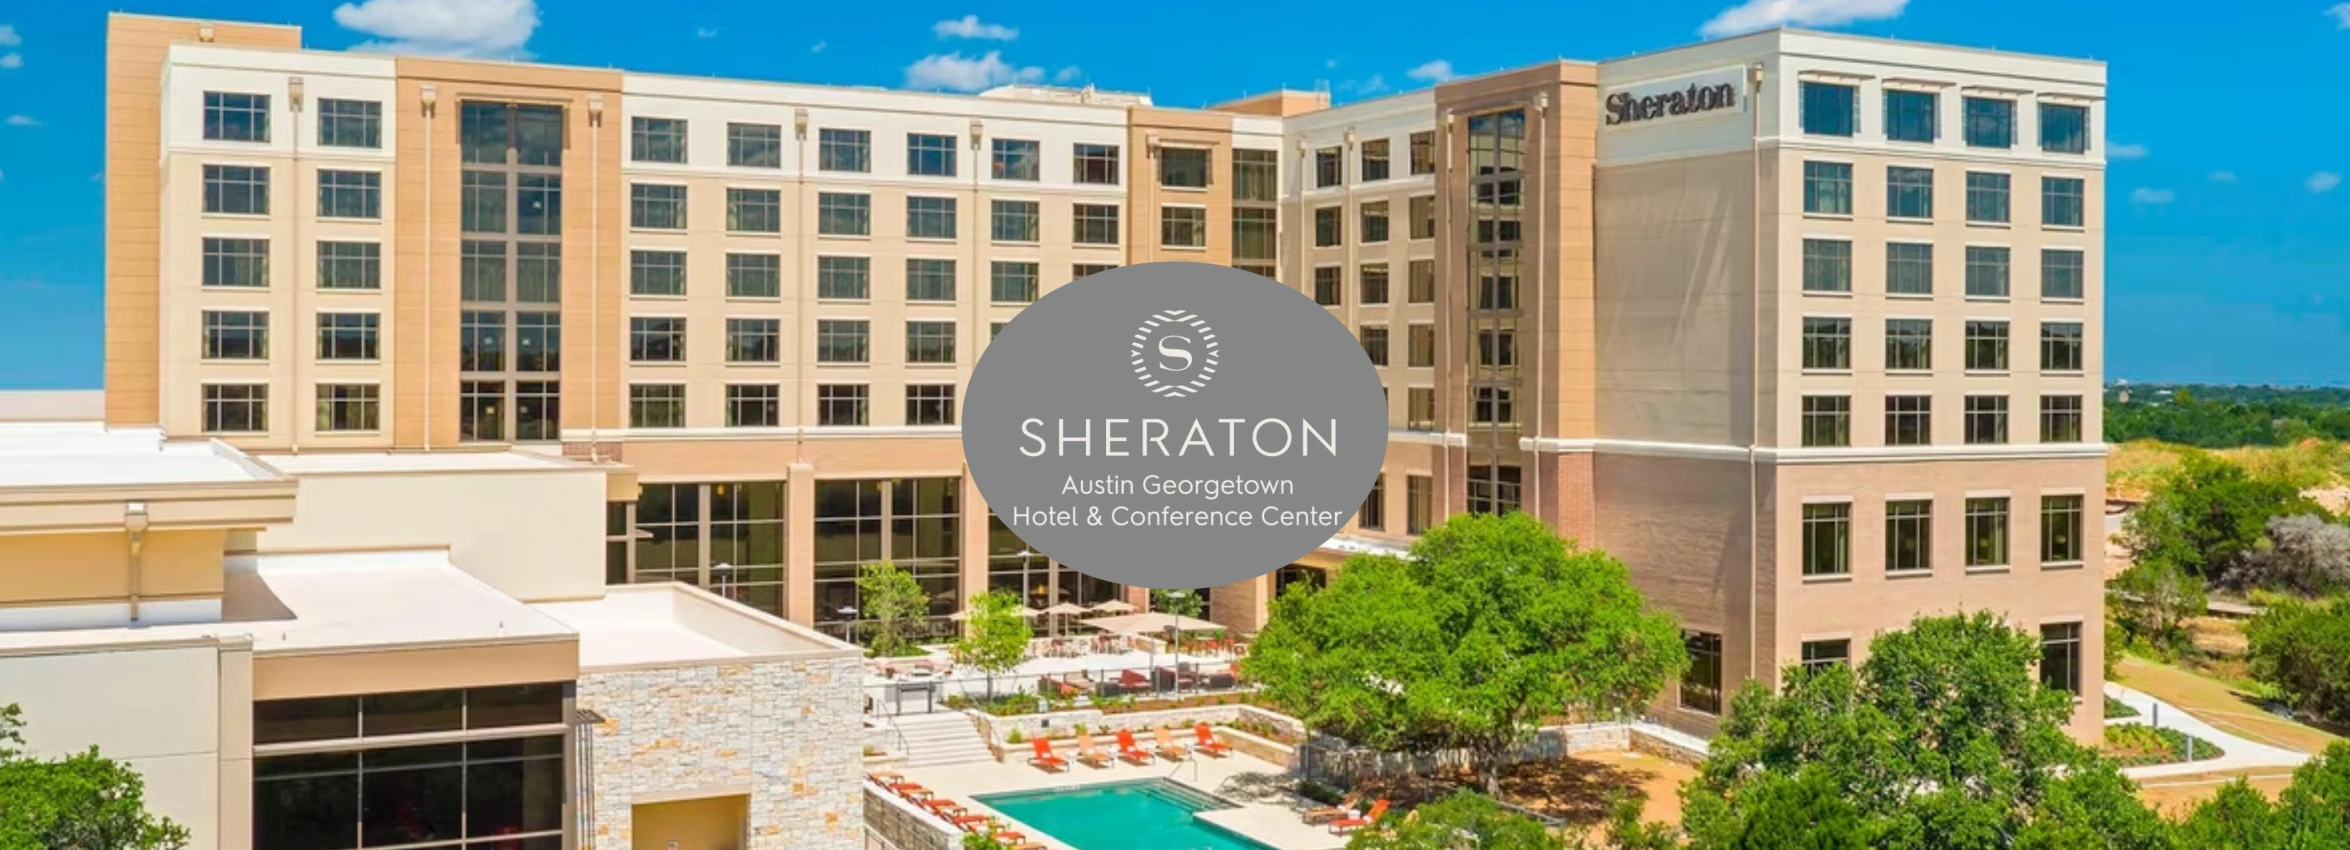 Sheraton-Austin-Georgetown-Hotel-_Desktop_ET